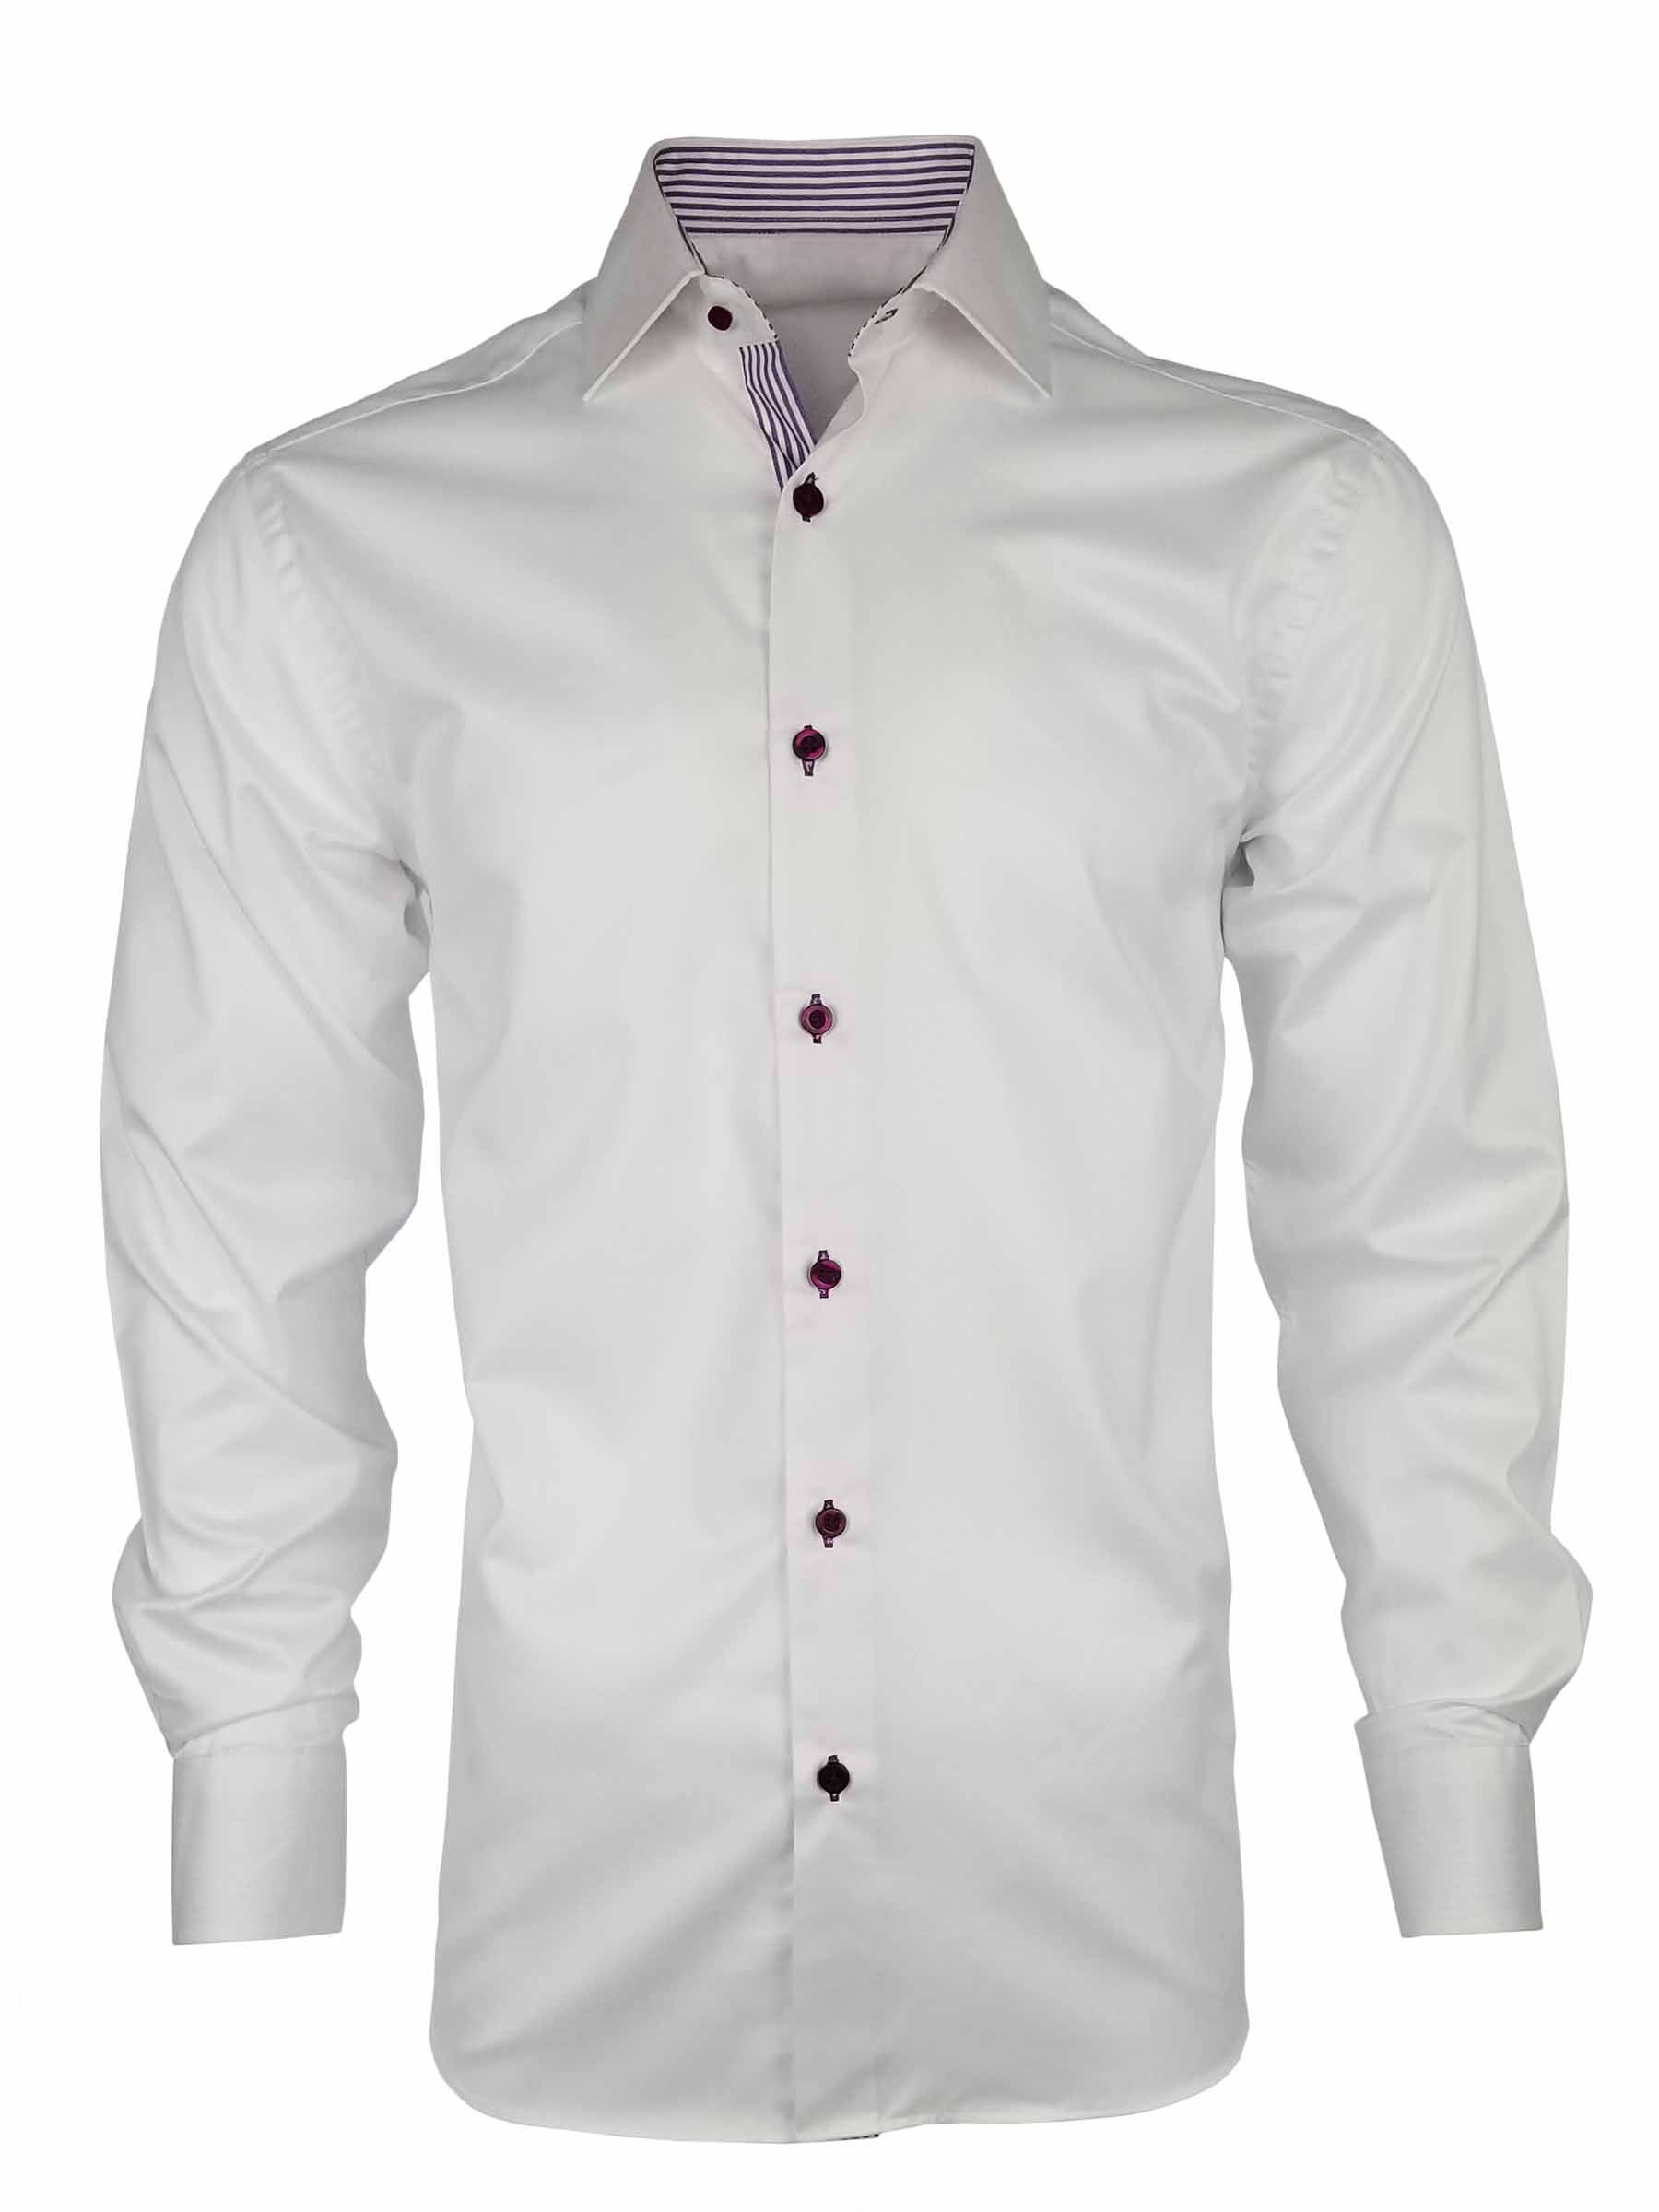 Men's White with Purple Stripe Contrast Shirt - Long Sleeve - Uniform Edit